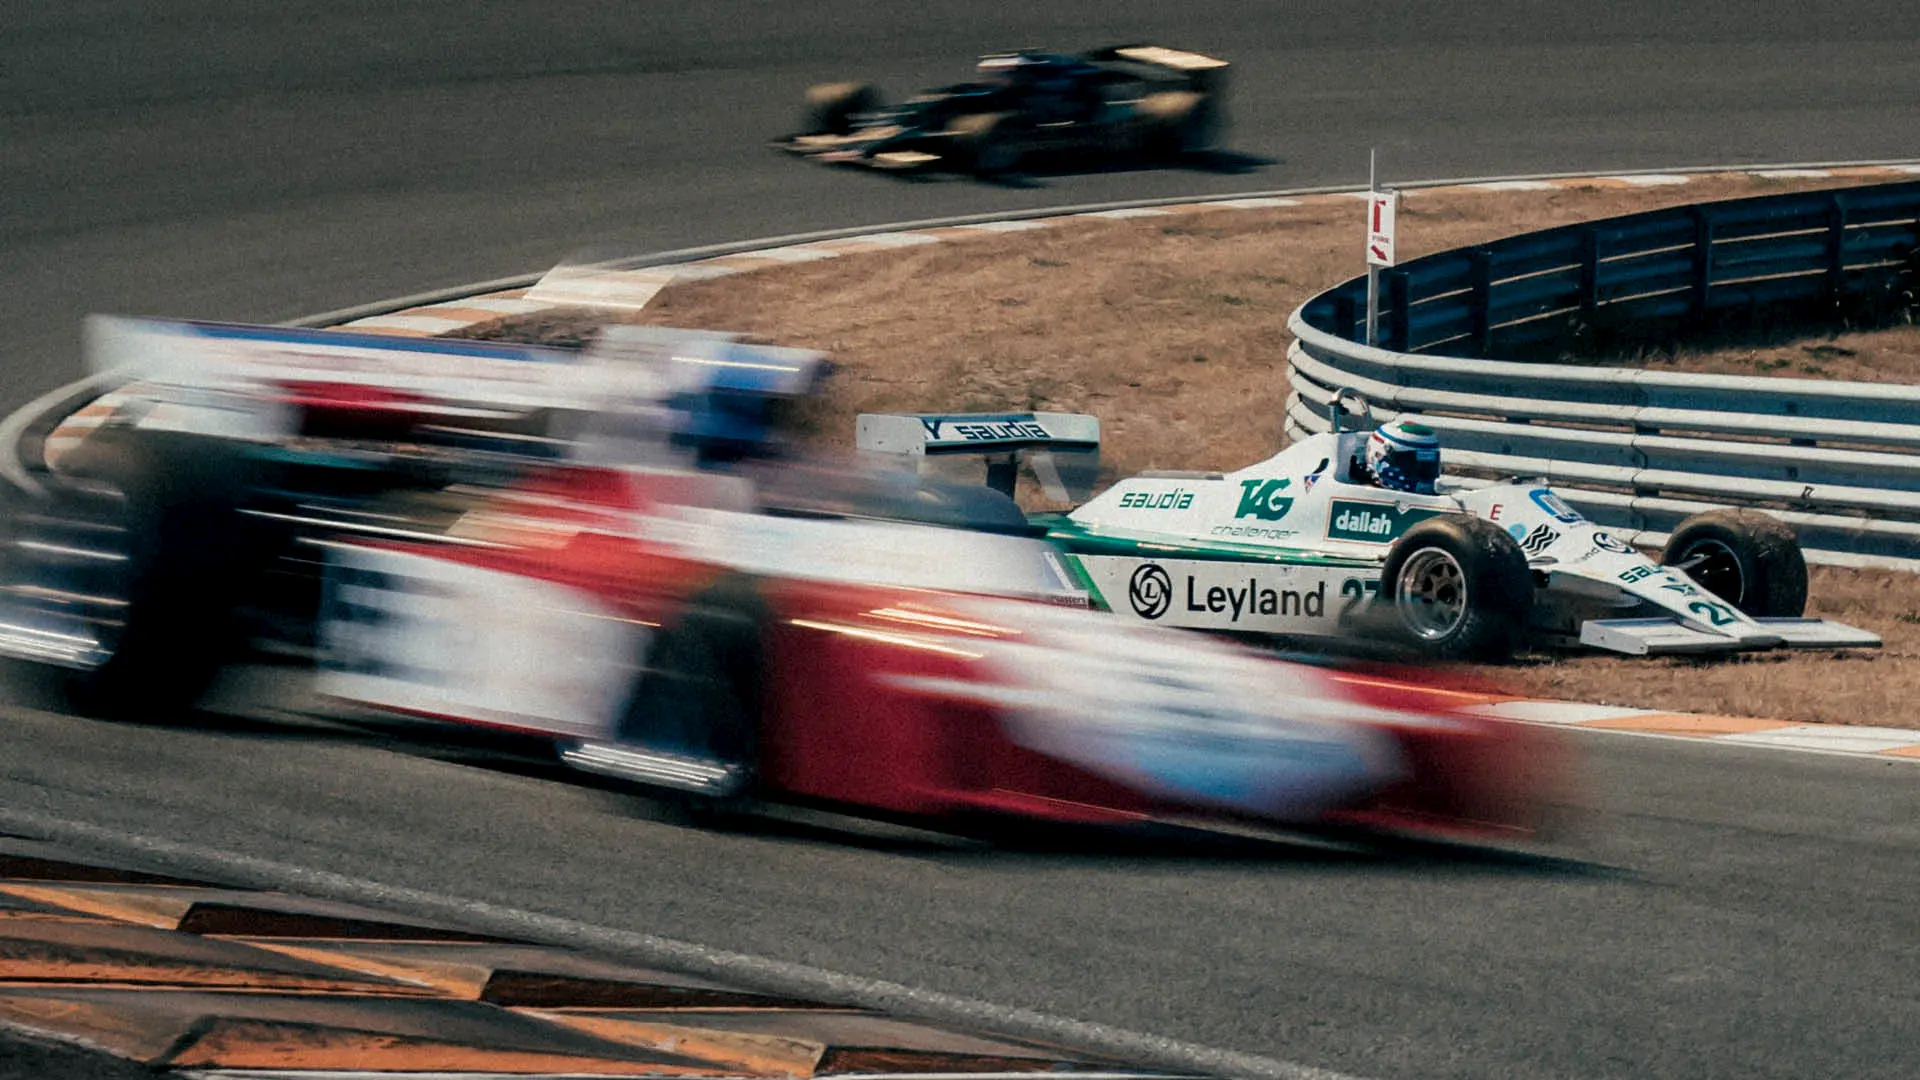 La F1 historique Williams FW07 sortie de piste à Zandvoort lors du Grand Prix historique de Zandvoort